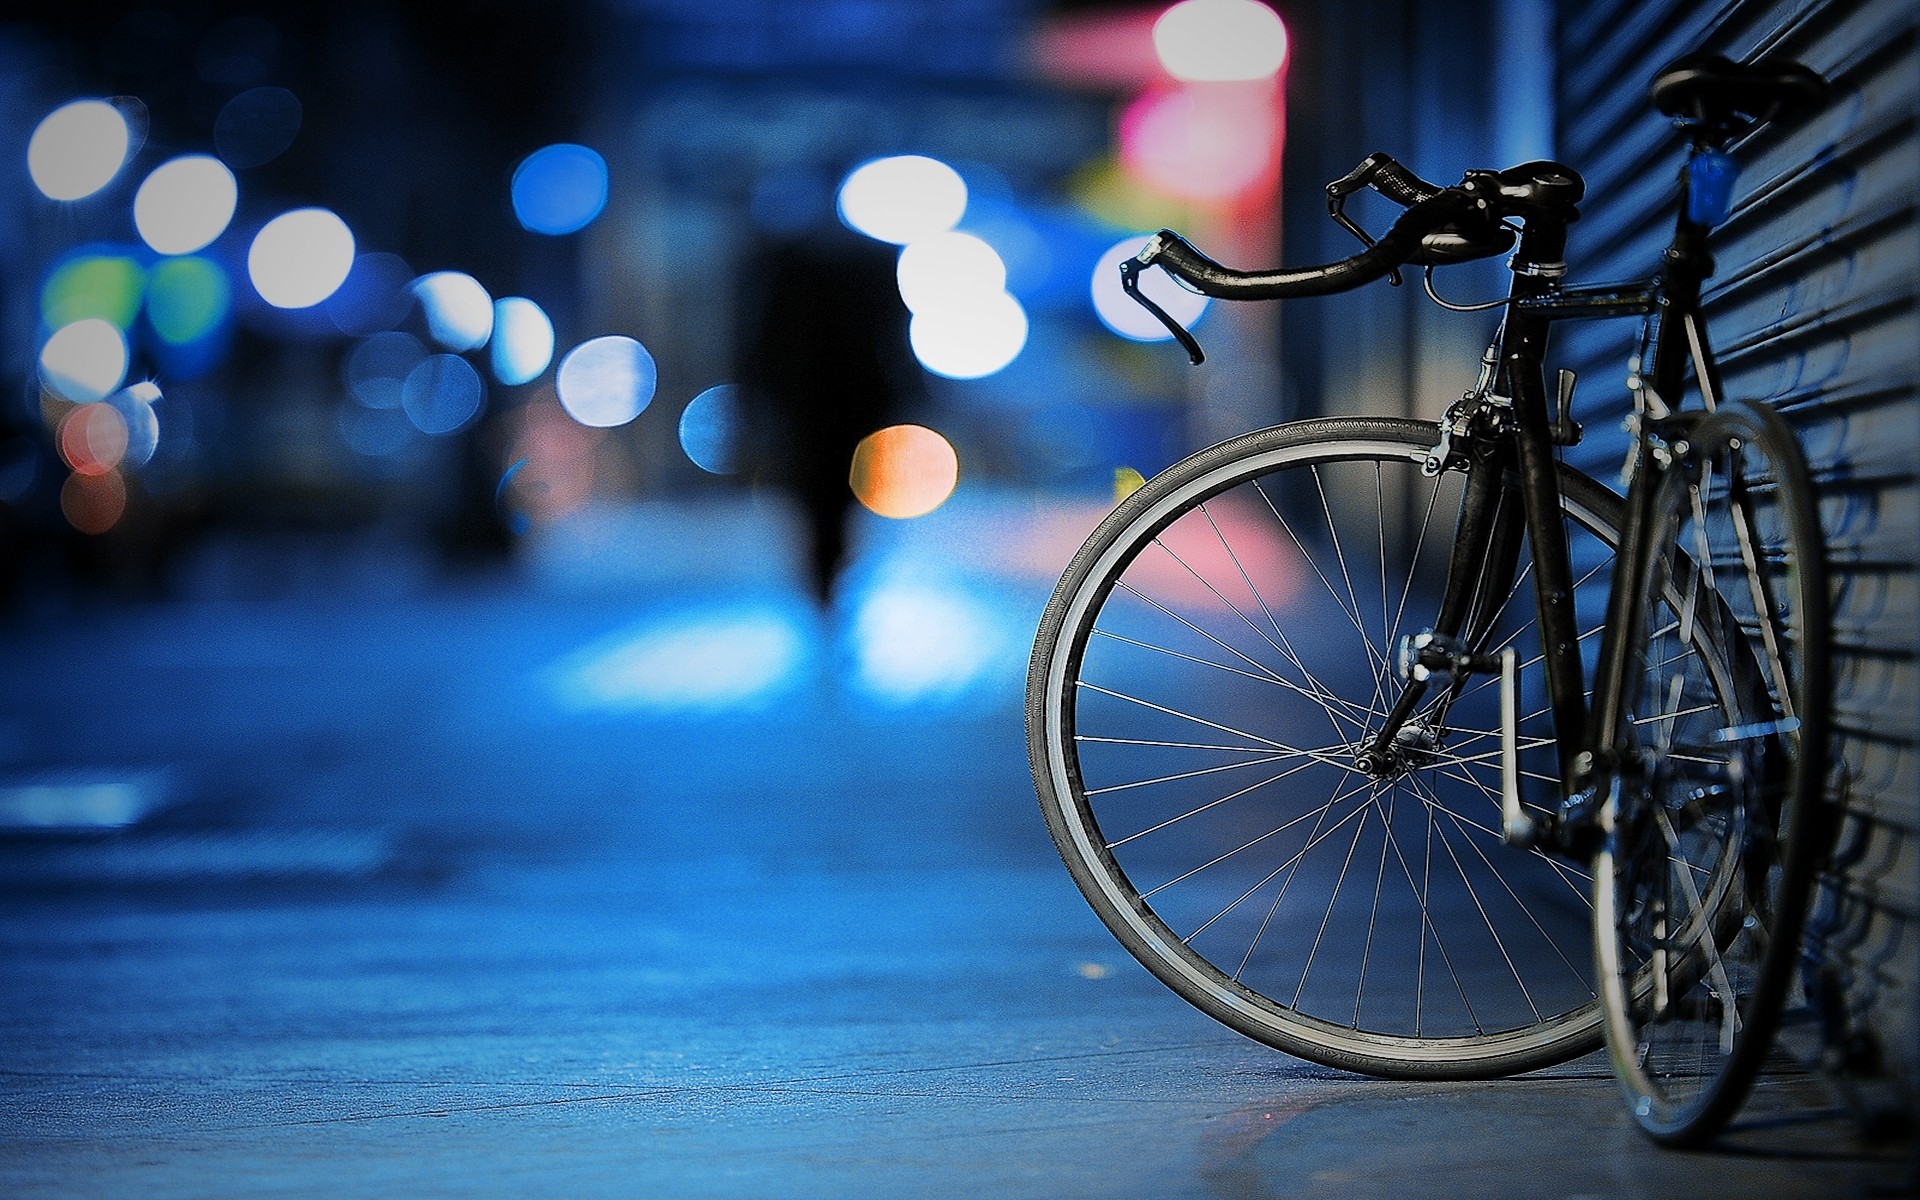 mood, alone, light, night, vehicles, bicycle, city